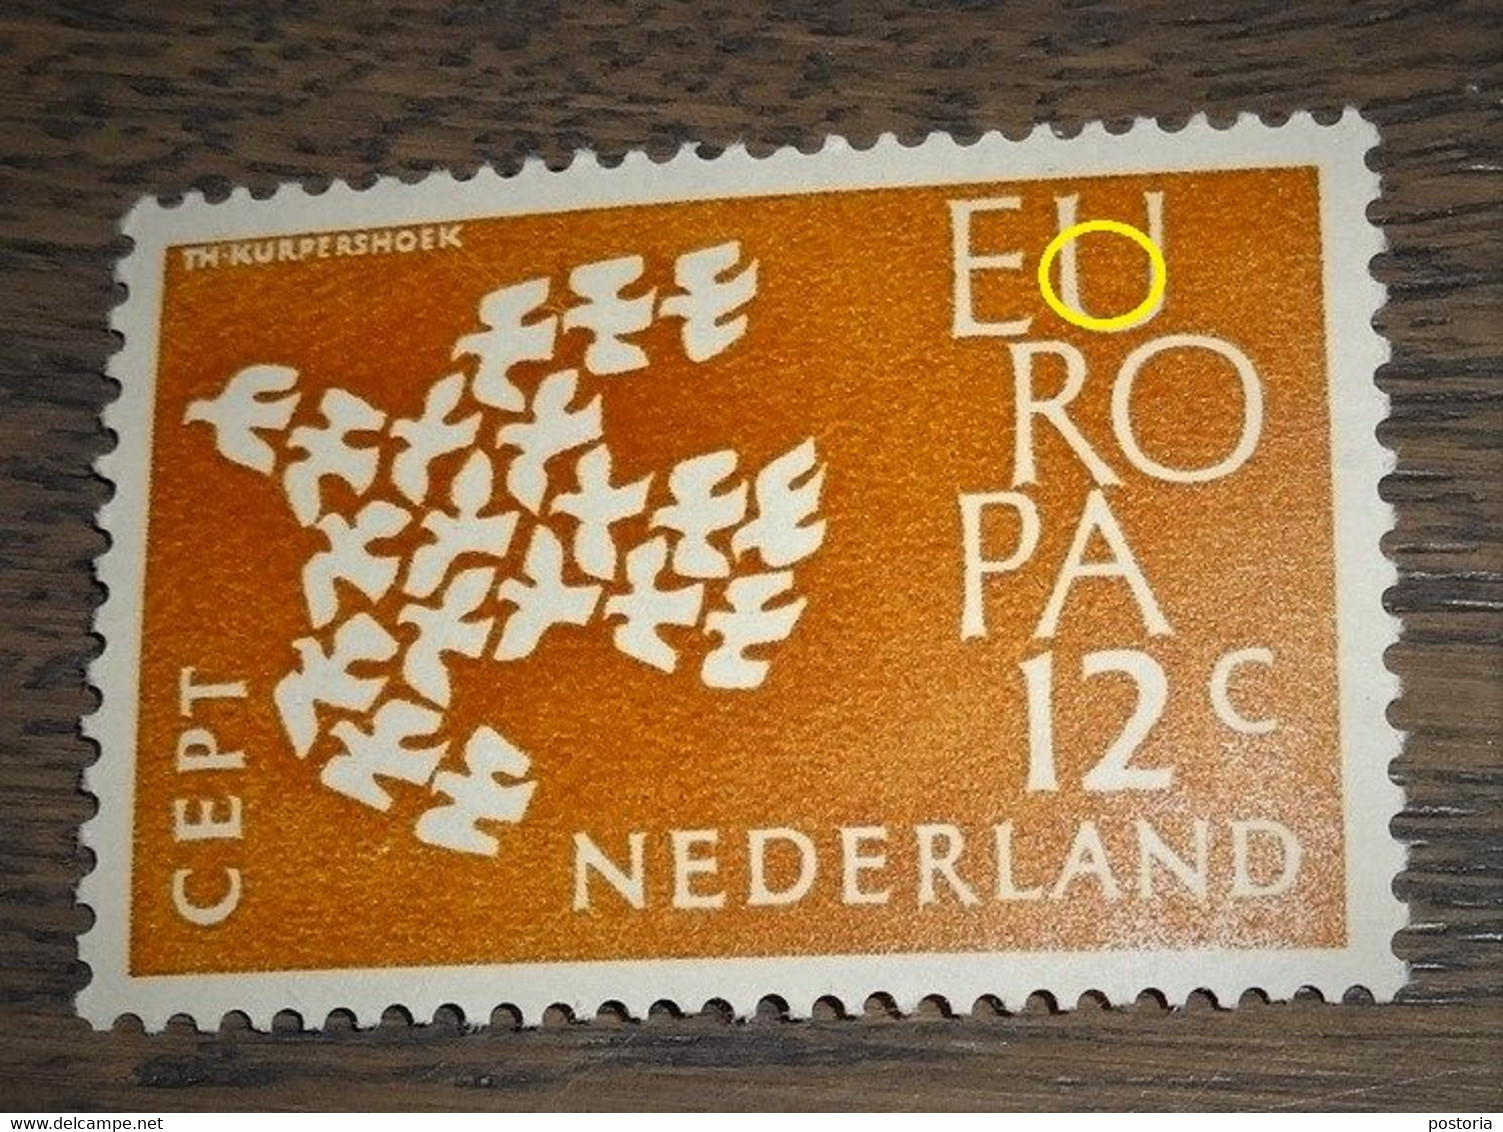 Nederland - MAST - 757 PM1 - 1961 - Plaatfout - Postfris - Vlek In U Van EU - Variedades Y Curiosidades